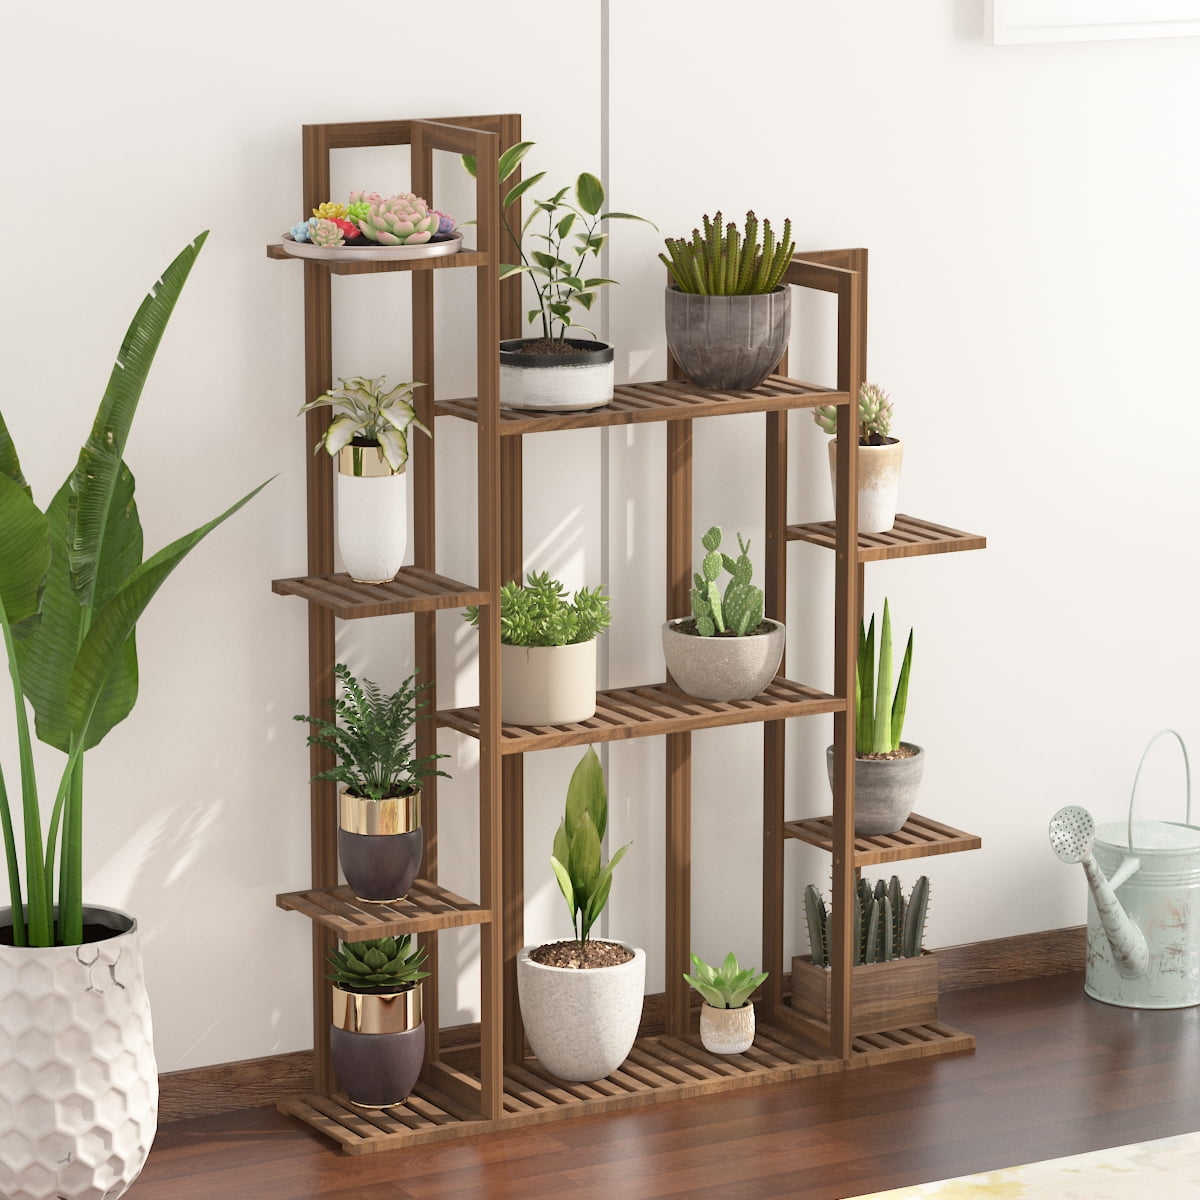 Details about   Flower Plant Display Rack Shelves Stand Wood Storage Outdoor Holder Garden Decor 